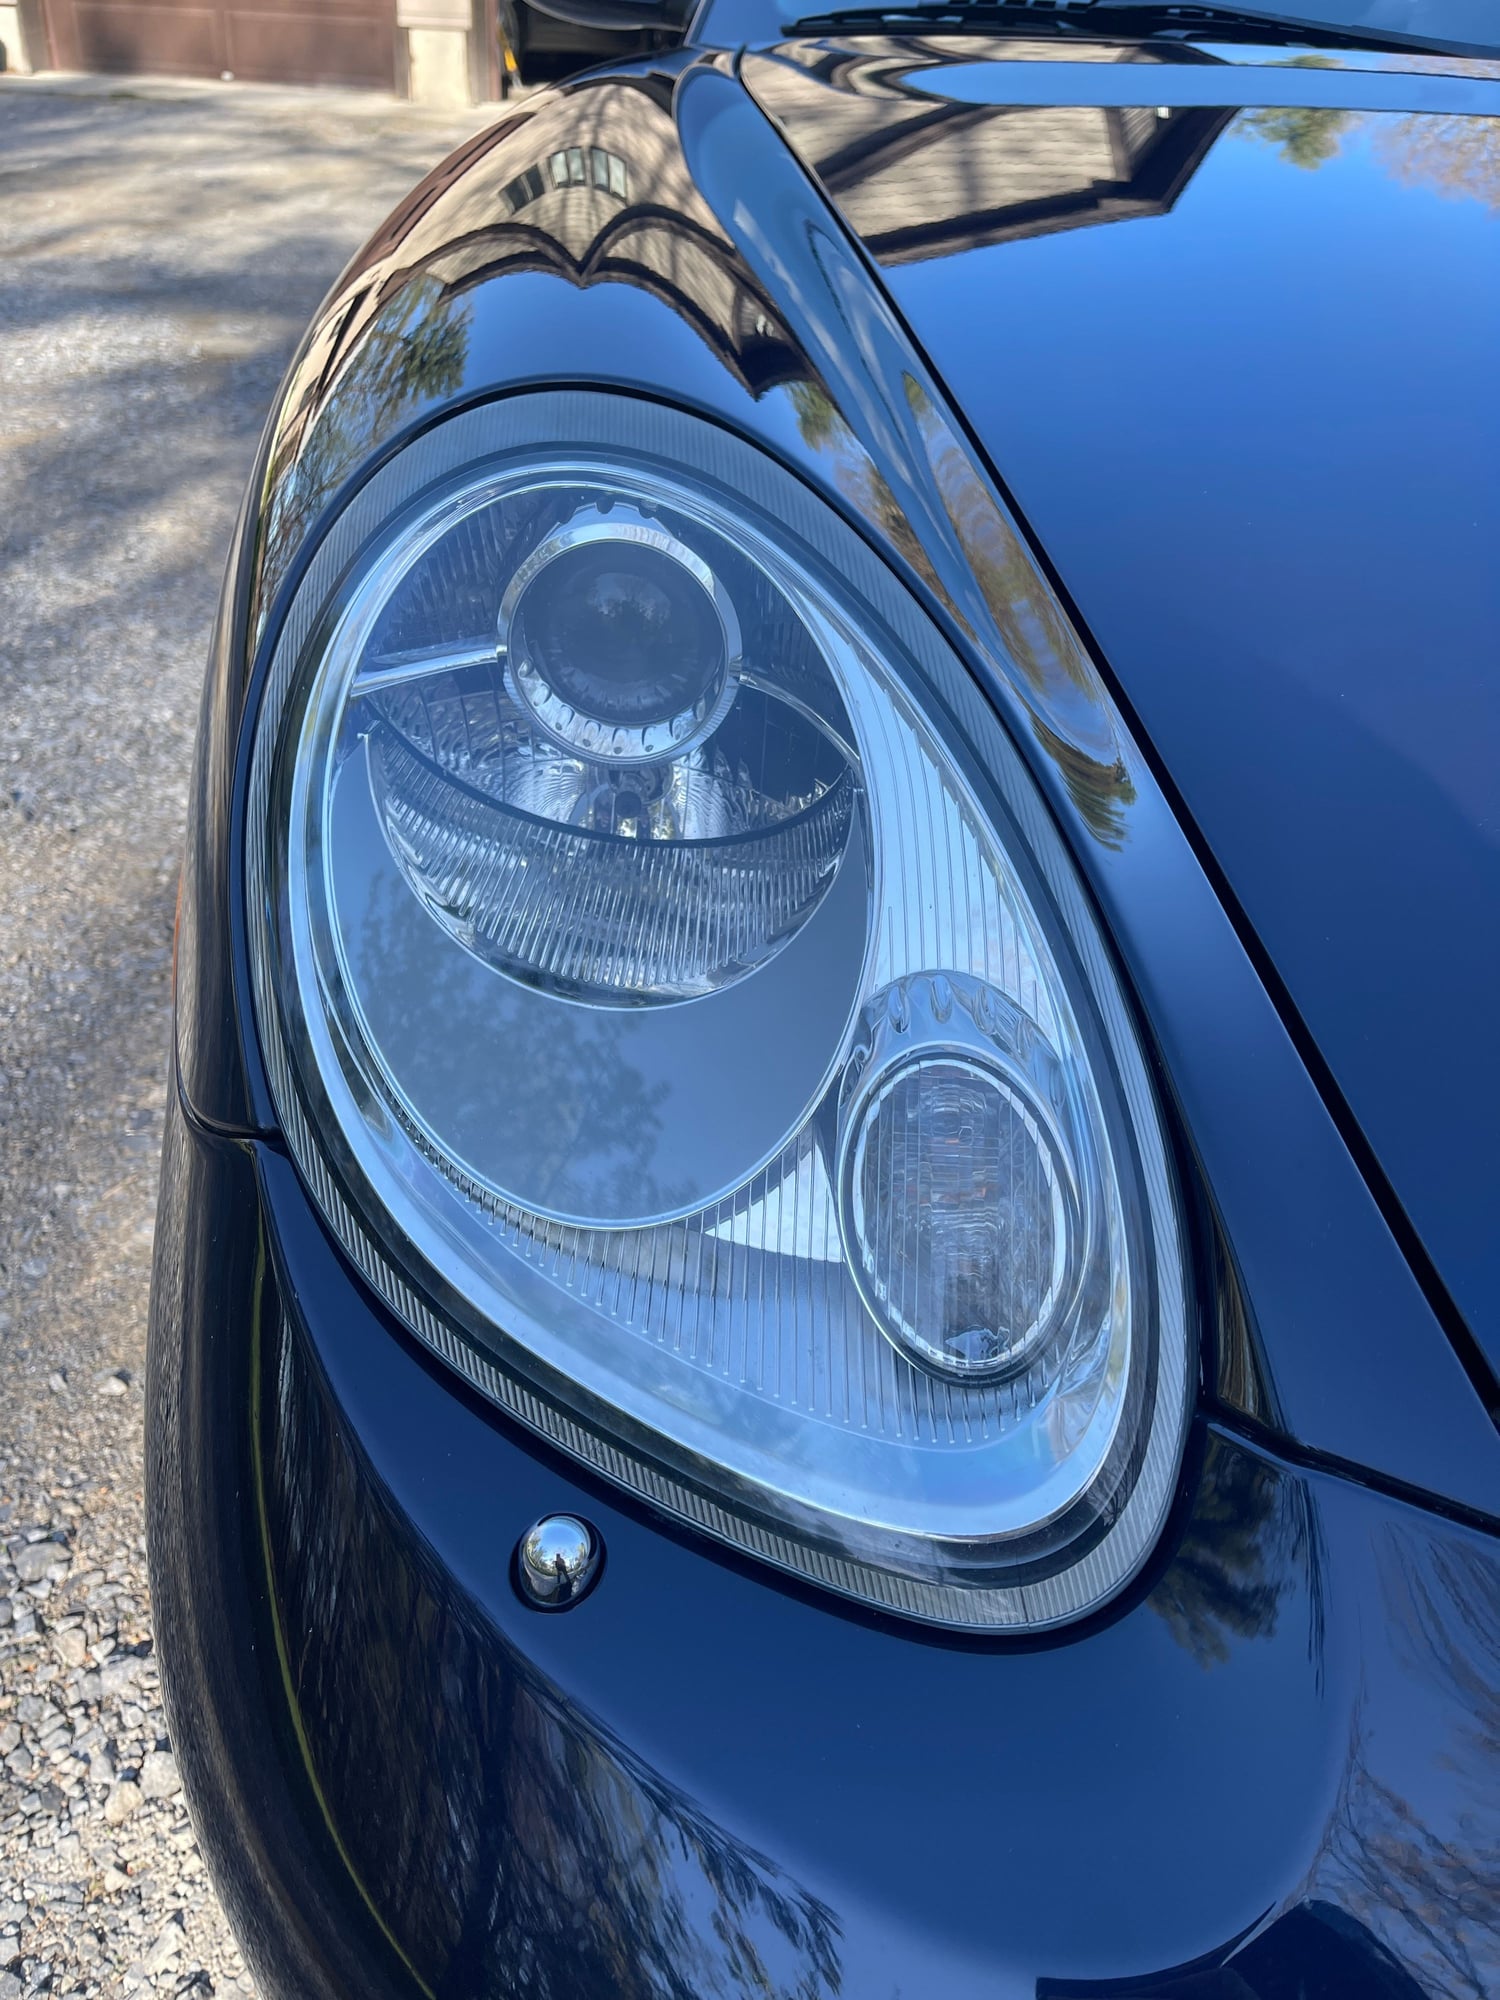 2007 Porsche Boxster - 2007 Boxster S, Midnight Blue w Stone Grey interior, 6 Spd, bi-xenon light package - Used - VIN WP0CB29897U730570 - 70,200 Miles - 6 cyl - 2WD - Manual - Convertible - Blue - Queensbury, NY 12804, United States